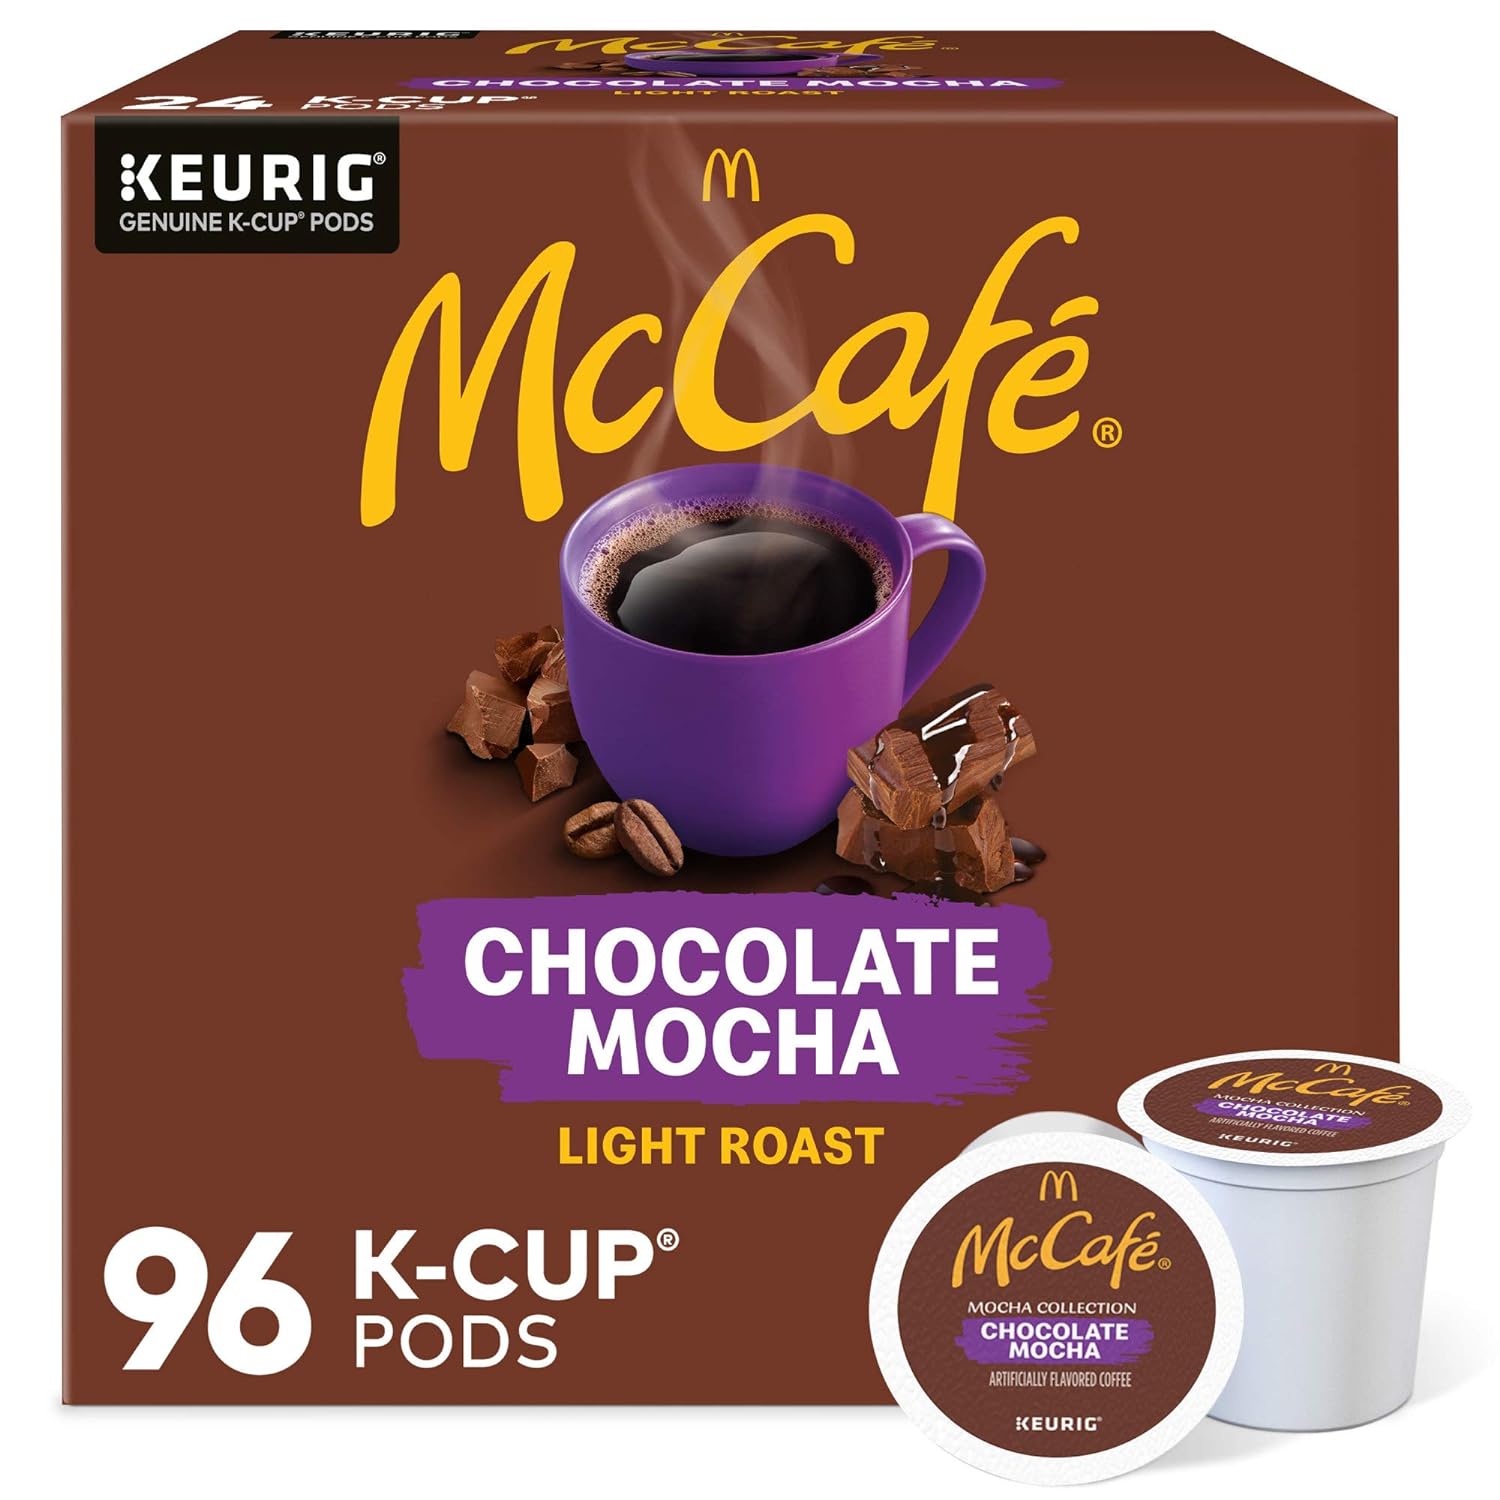 McCafe Chocolate Mocha, Single-Serve Keurig K-Cup Pods, Flavored Light Roast Coffee Pods Pods, 96 Count